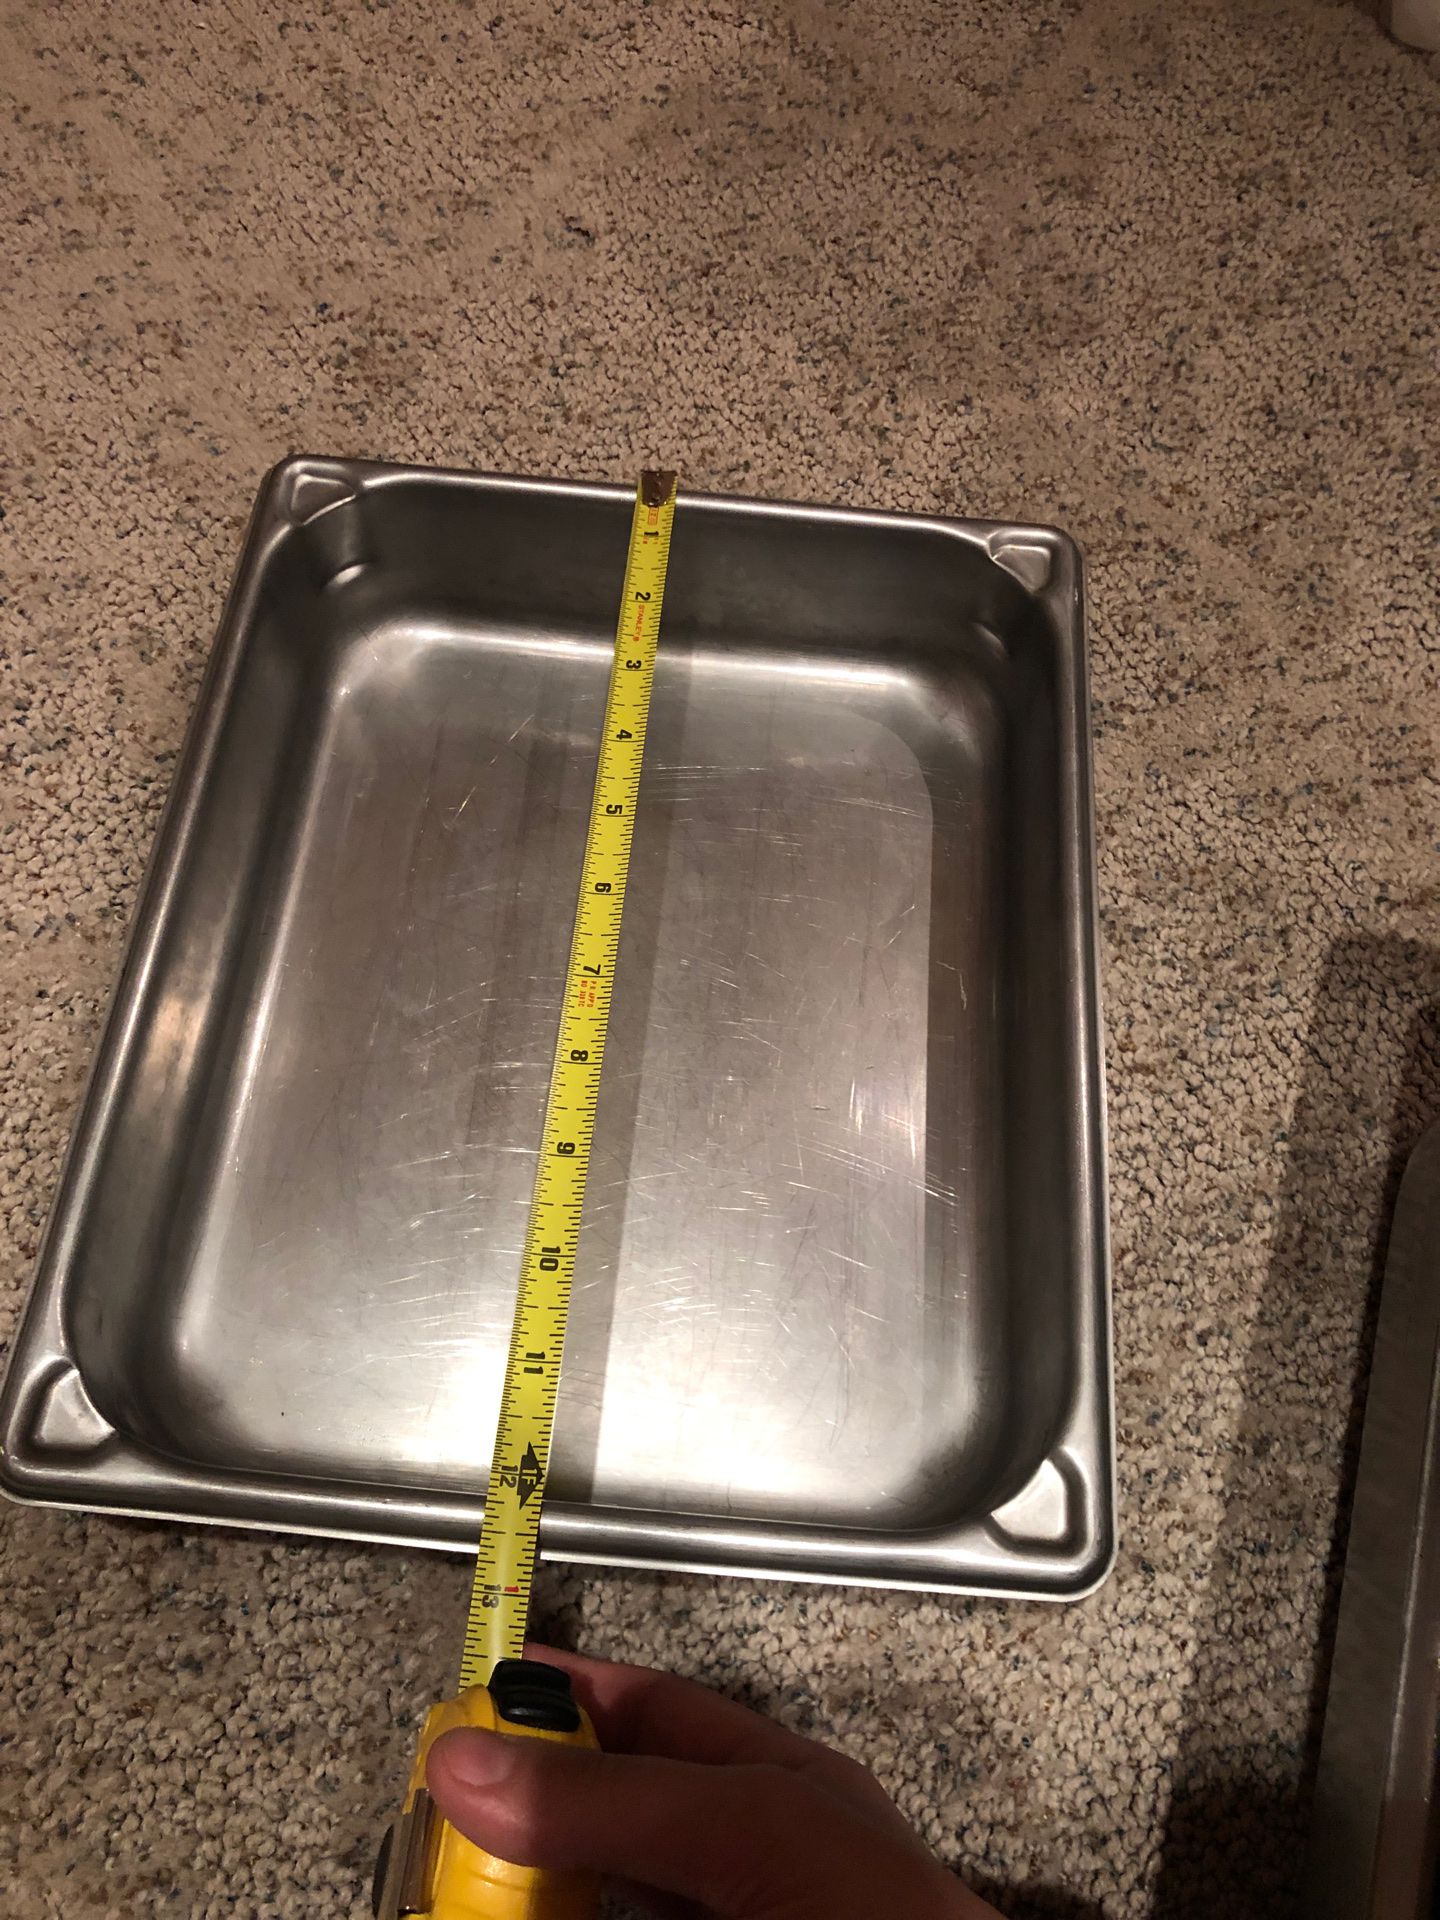 Medium sized restaurant steam pan